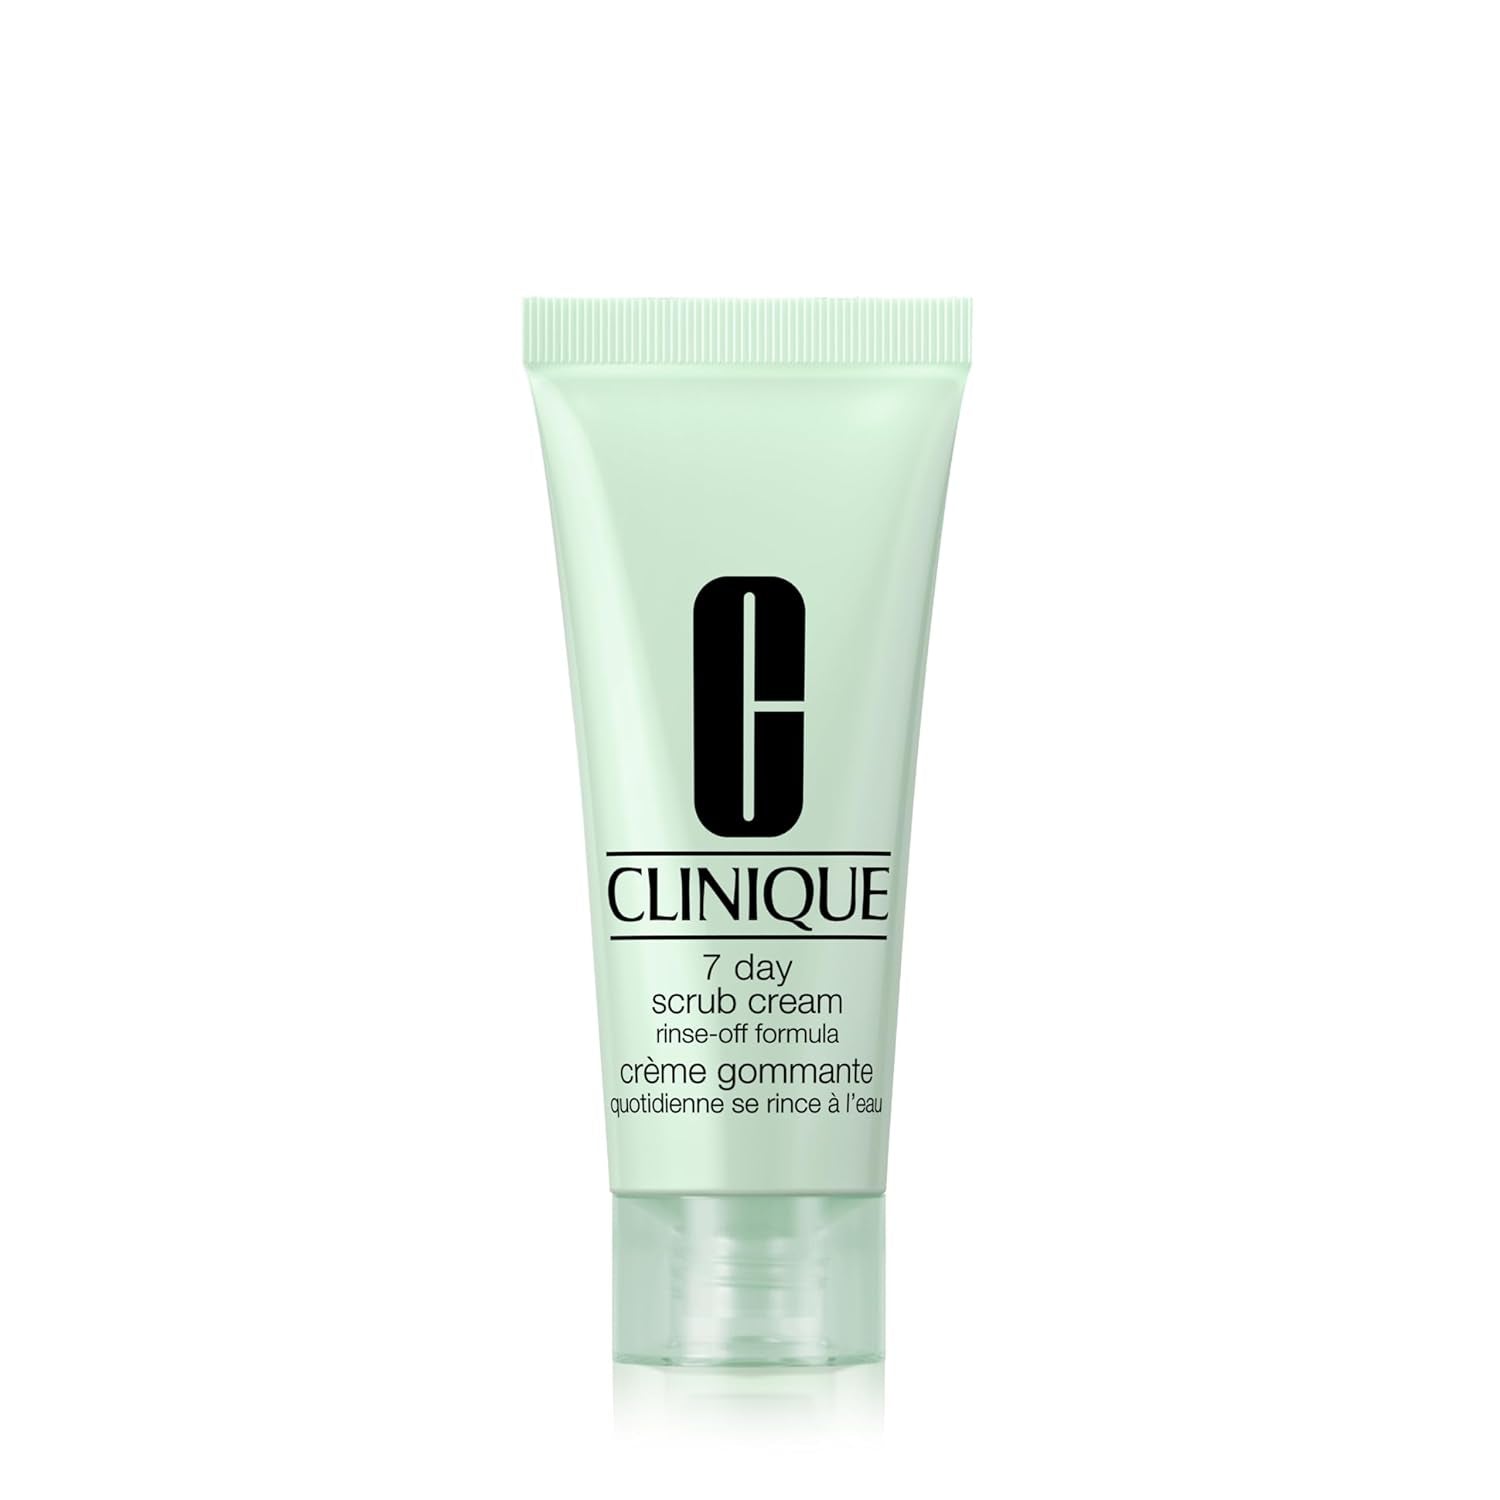 Clinique 7 Day Scrub Cream for Gentle Exfoliating